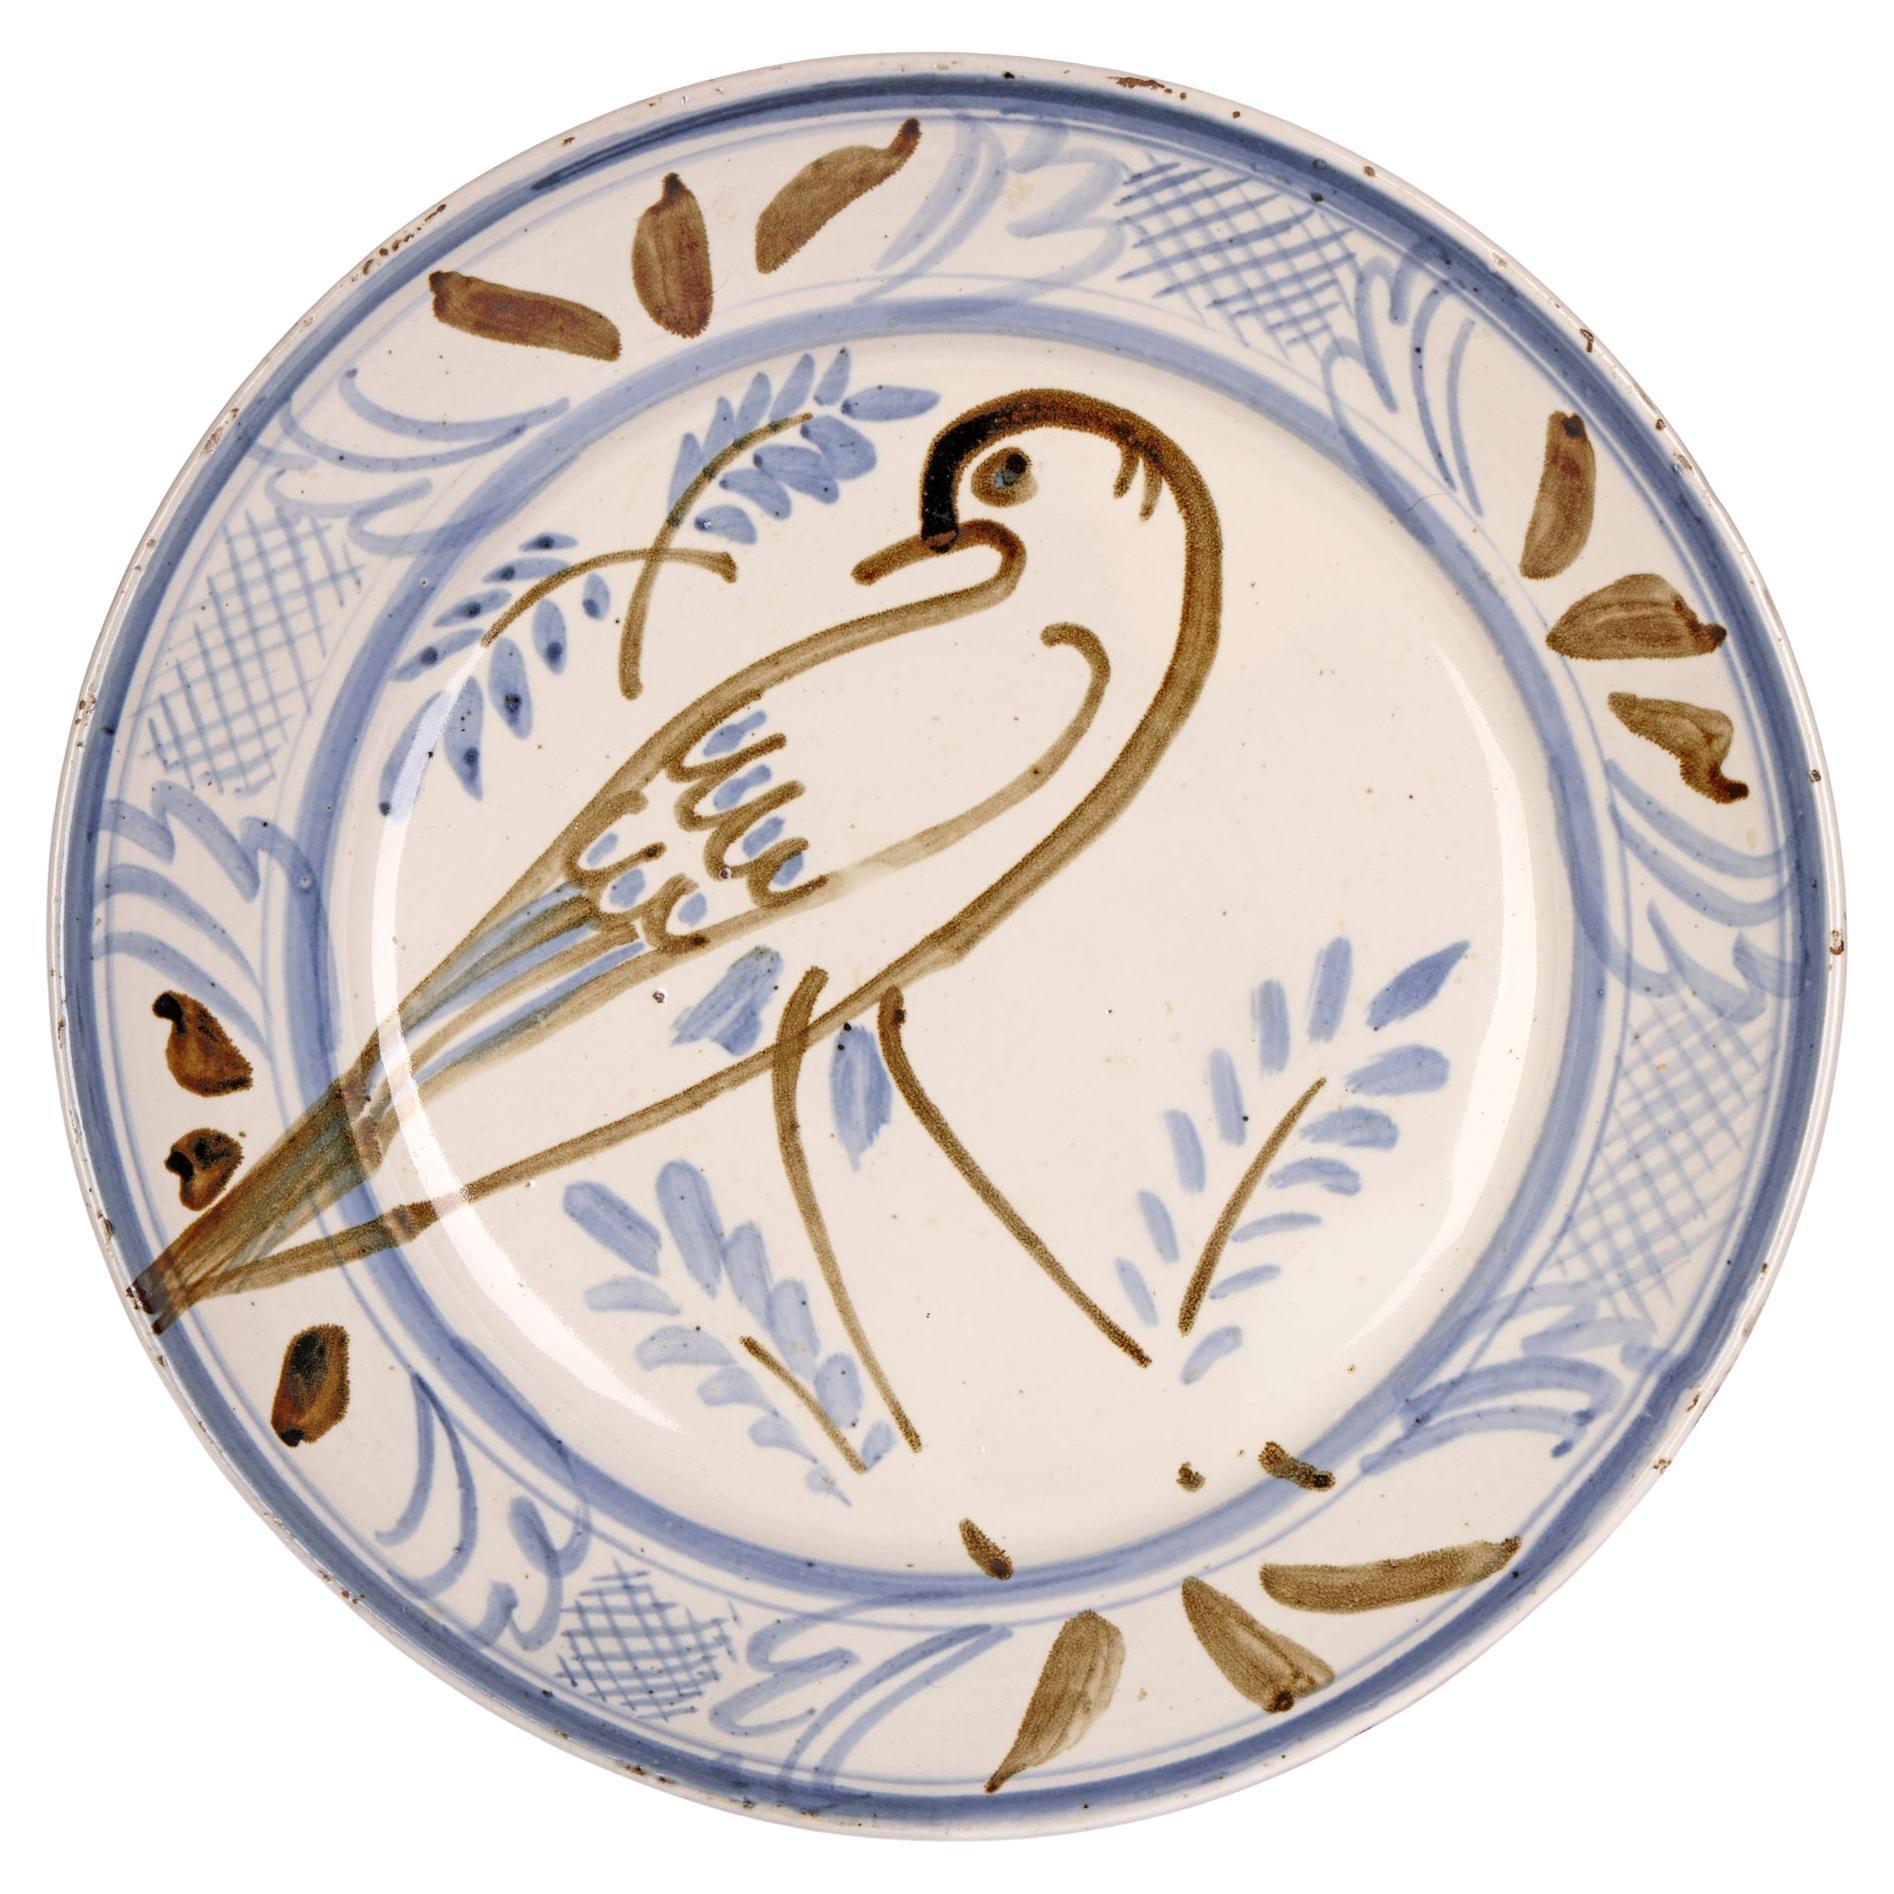 Seth Cardew Wenford Bridge Studio Pottery Bowl with Bird